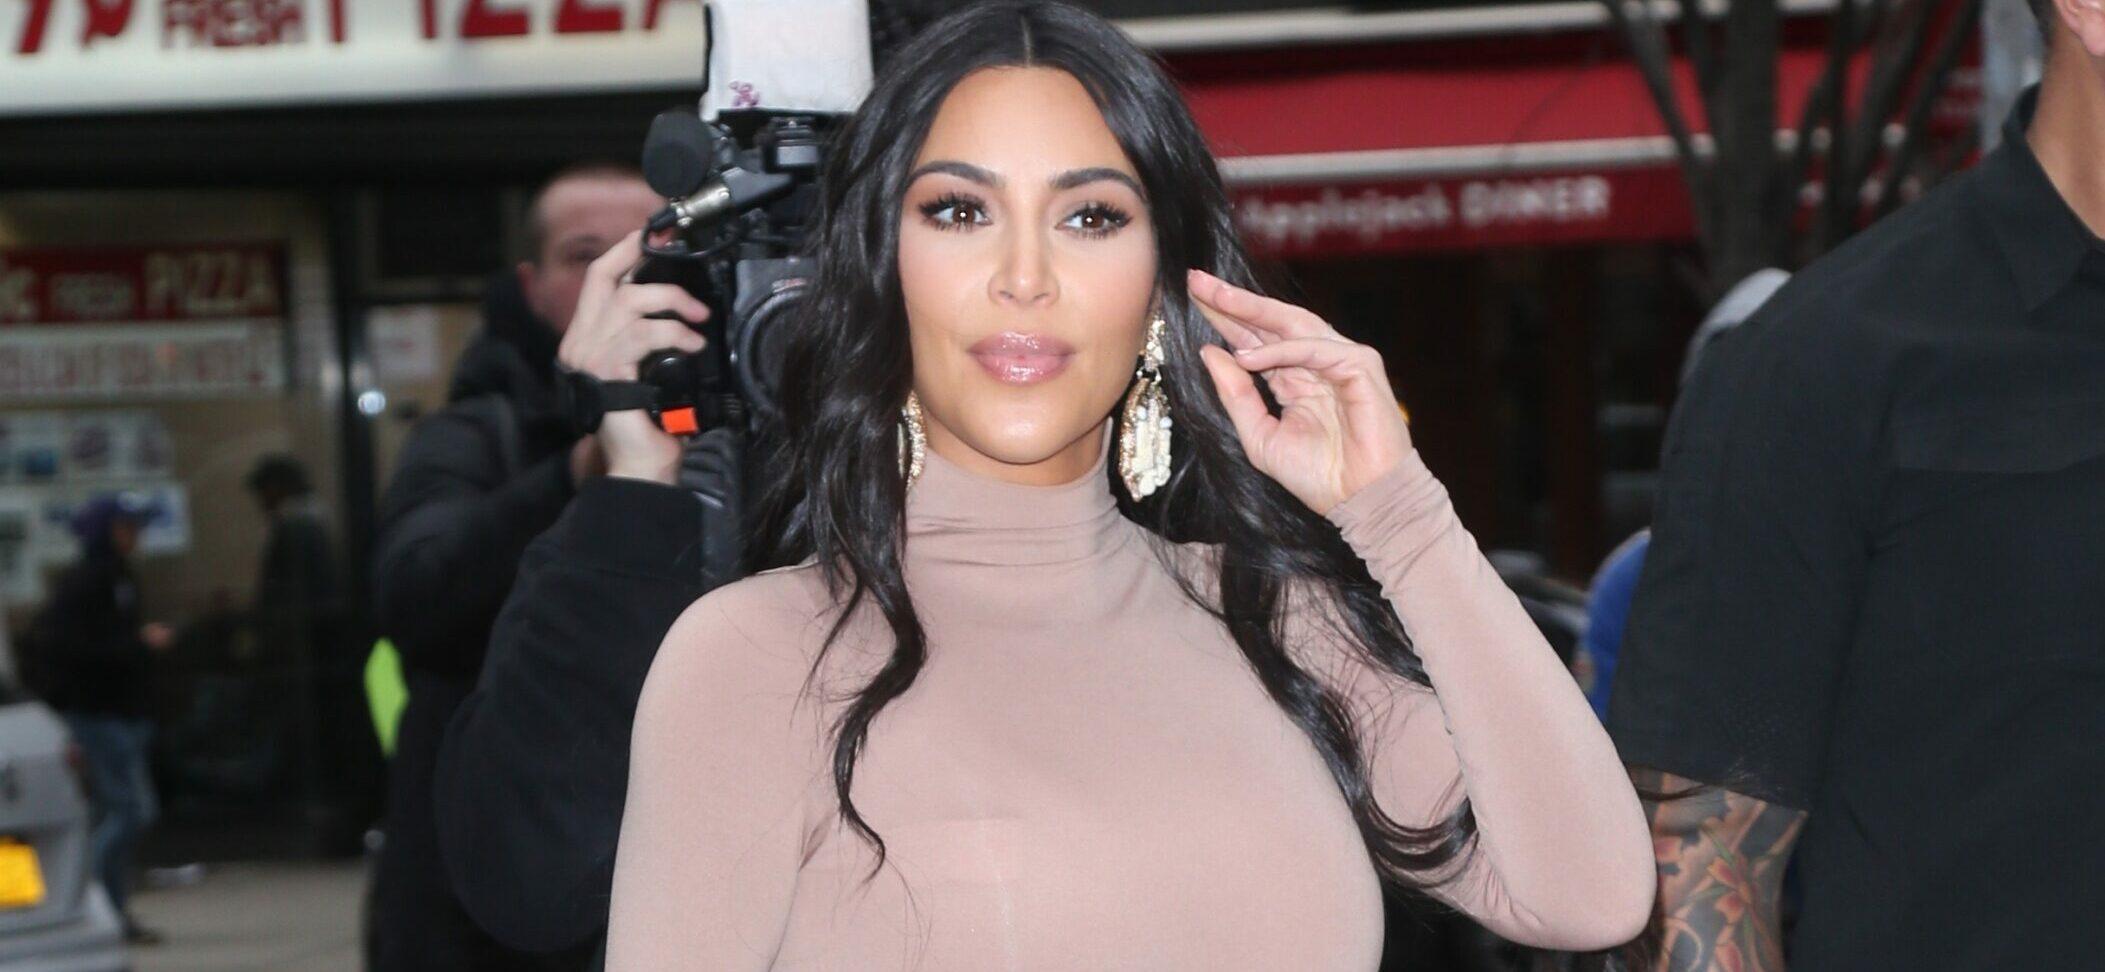 Kim Kardashian To Host Episode Of ‘Saturday Night Live’ In Upcoming 47th Season